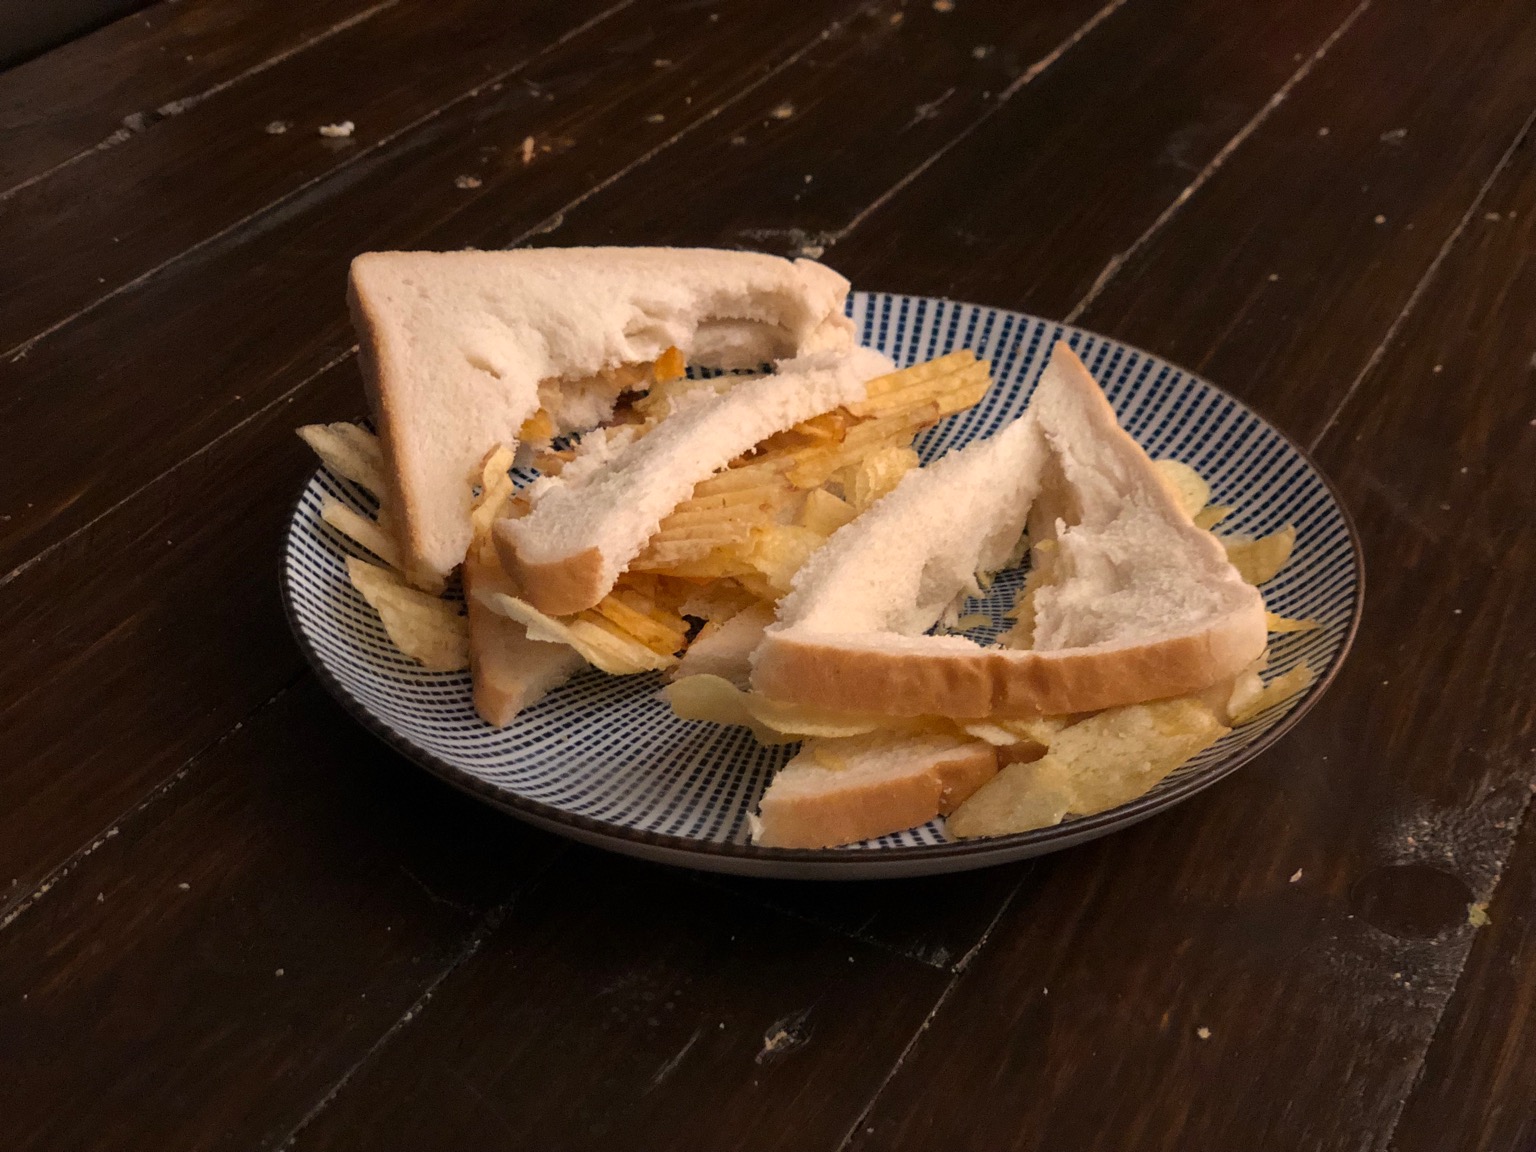 Diagonally-cut crisp sandwich torn apart